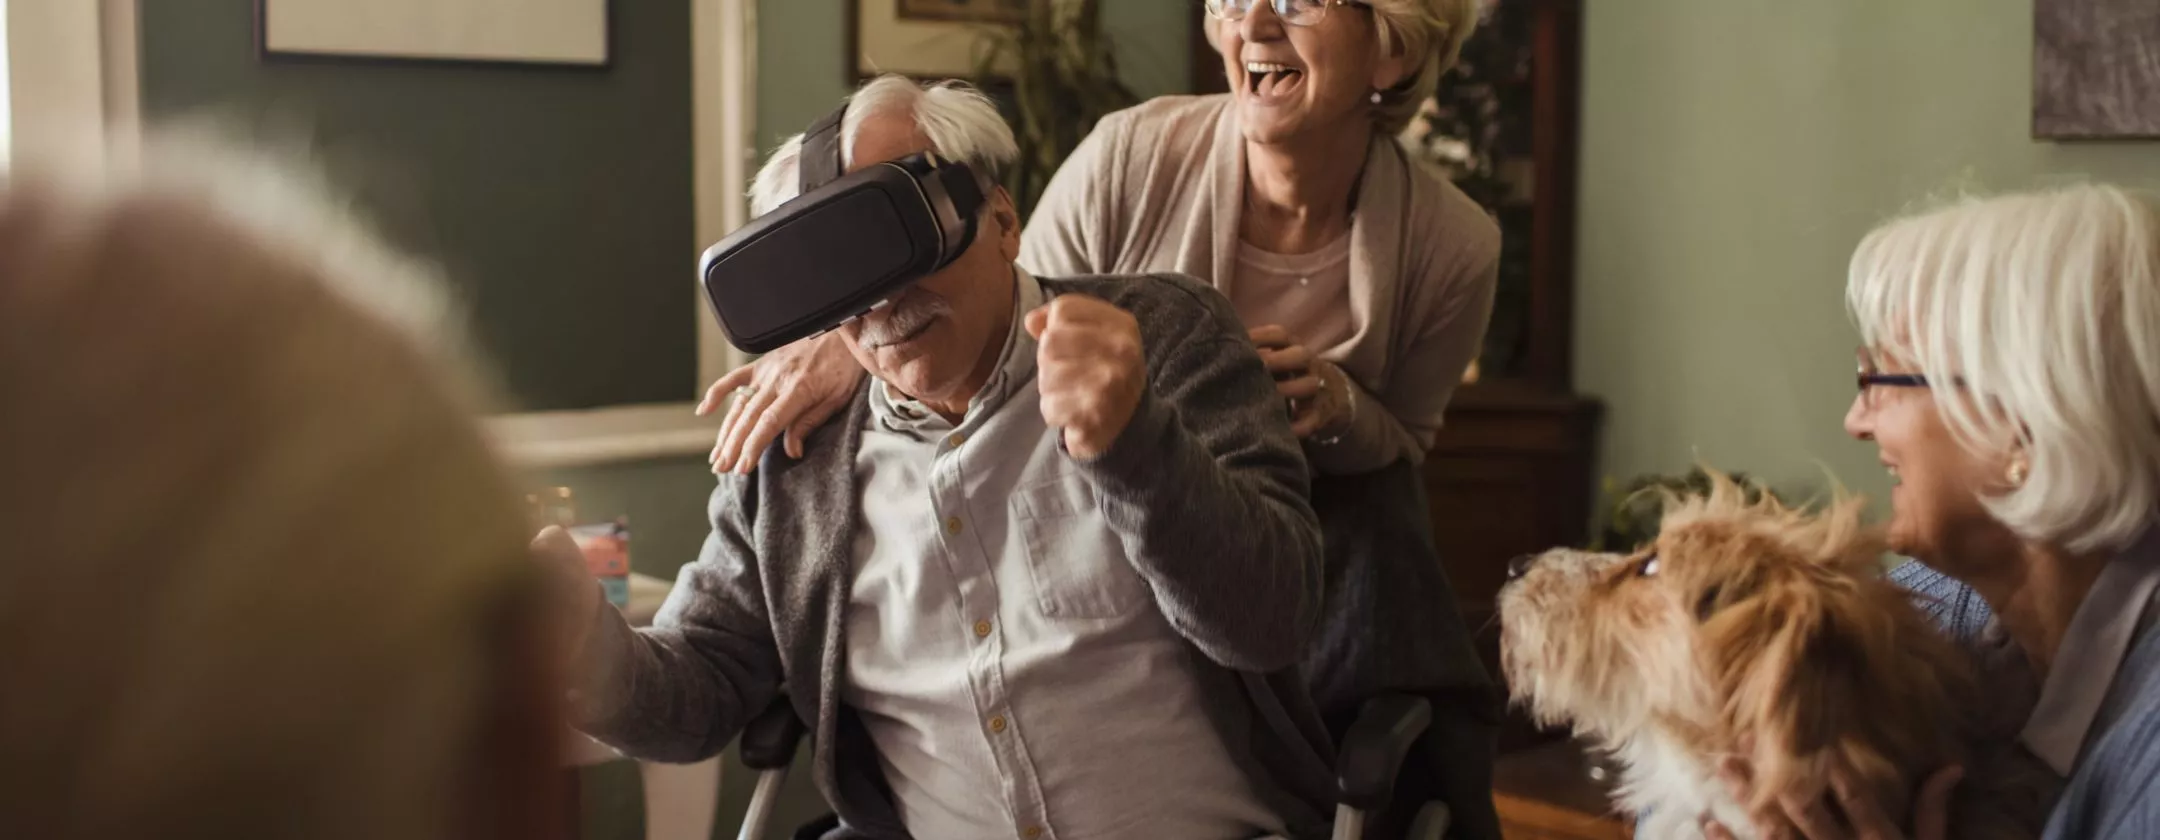 Seniors using virtual reality headset